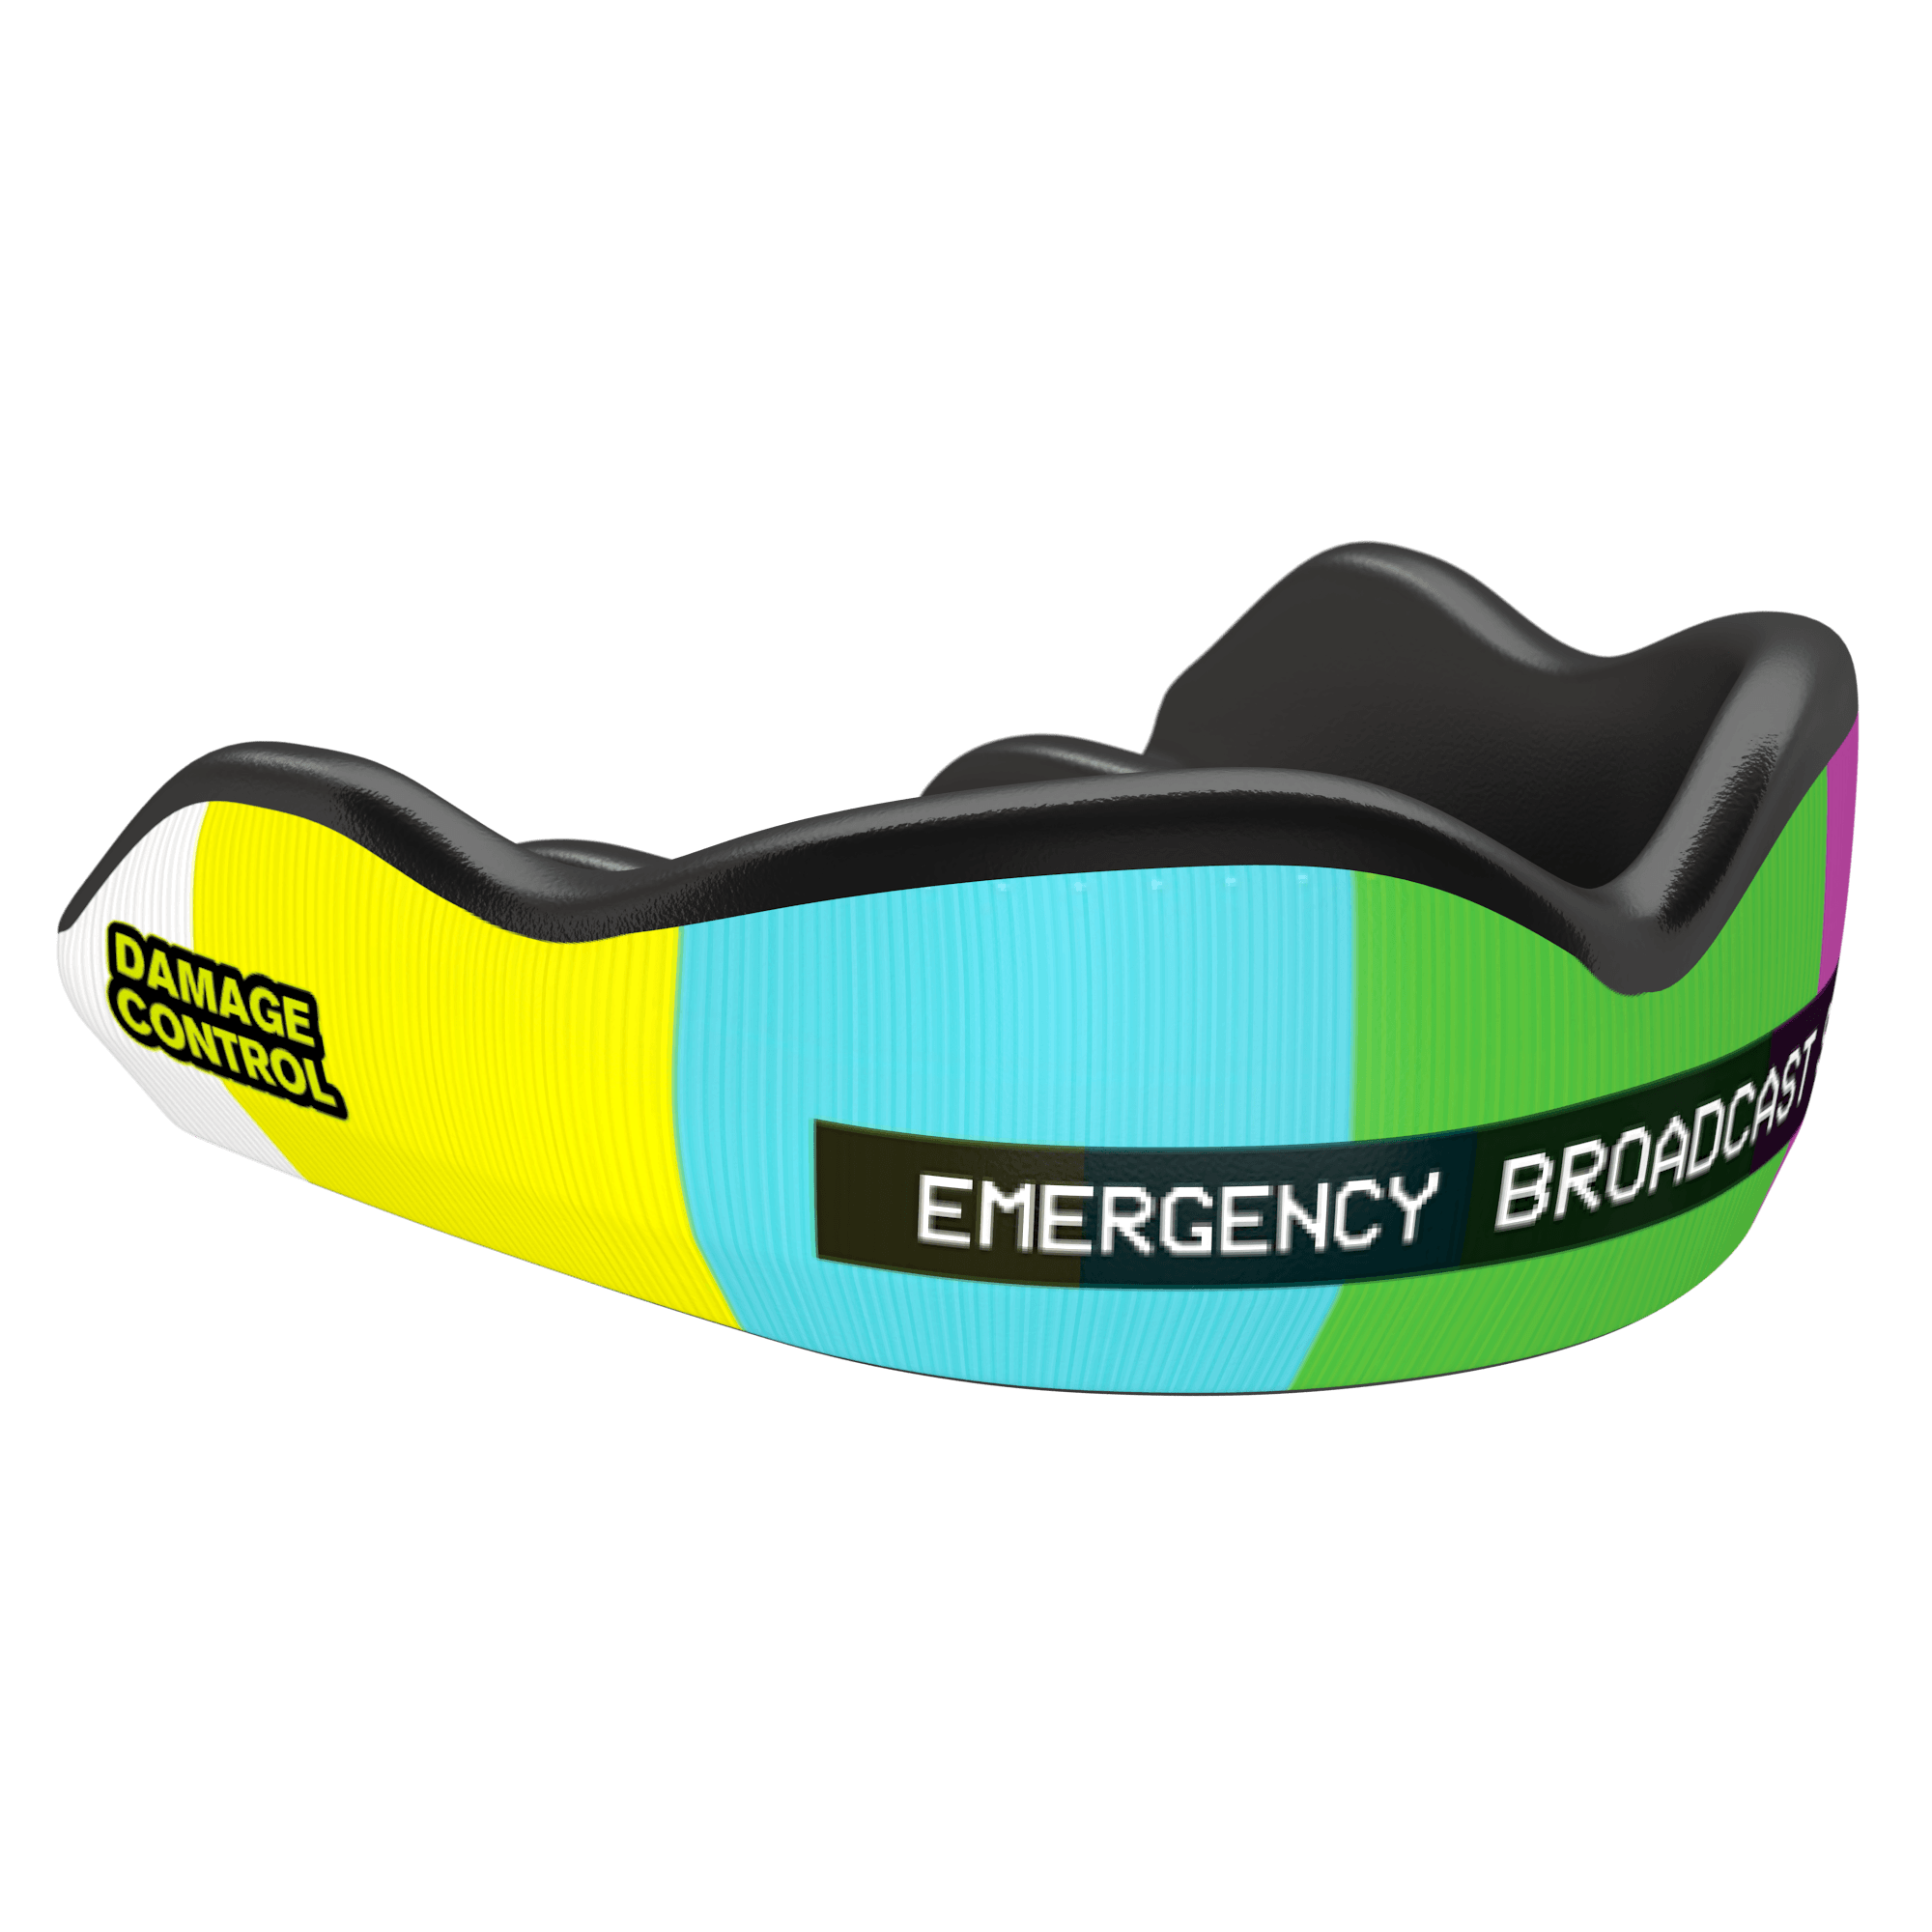 Emergency Broadcast System (HI) - Damage Control Mouthguards